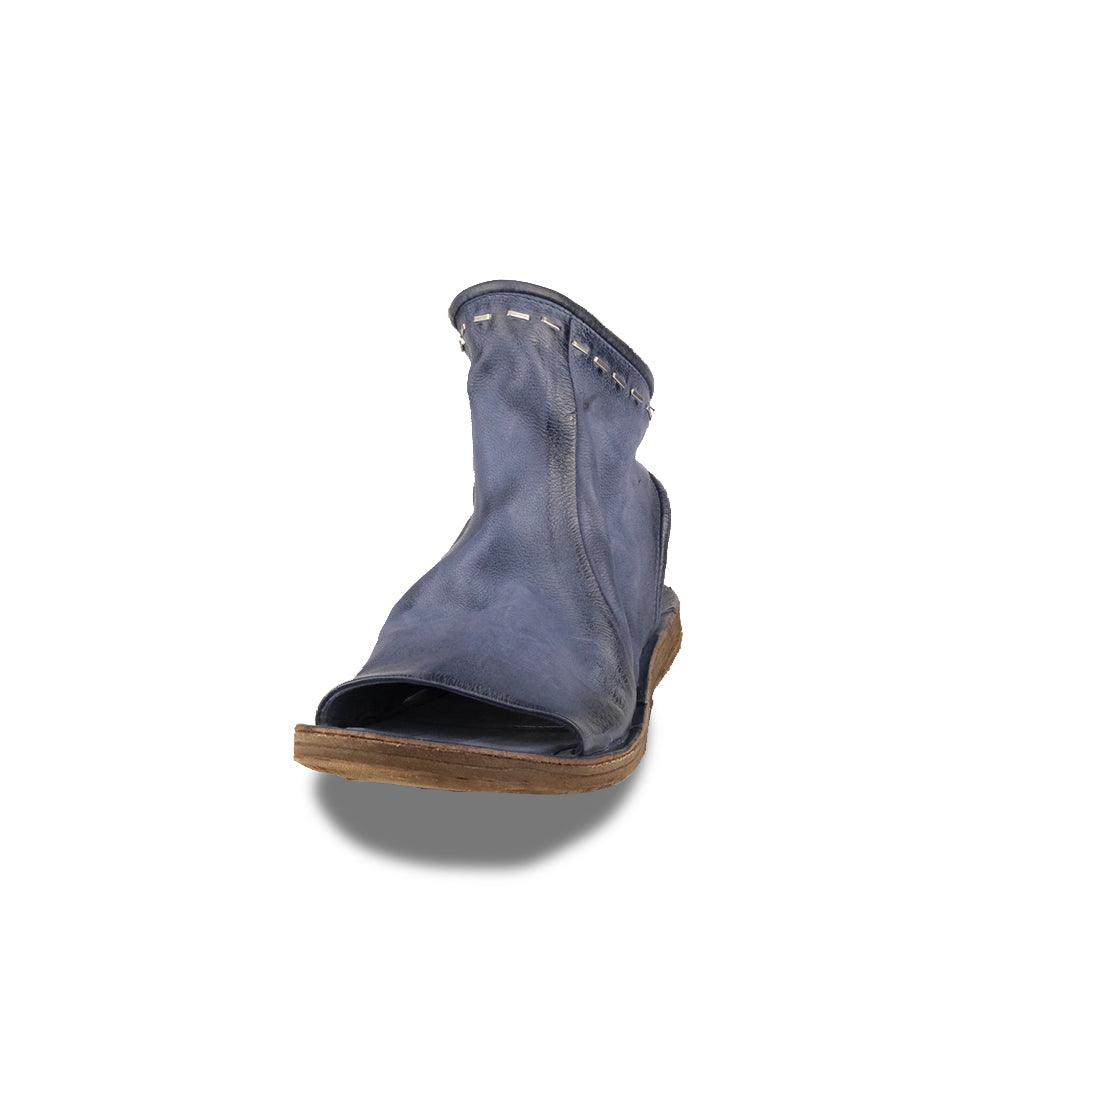 Isabella - A.S. 98 - sandals